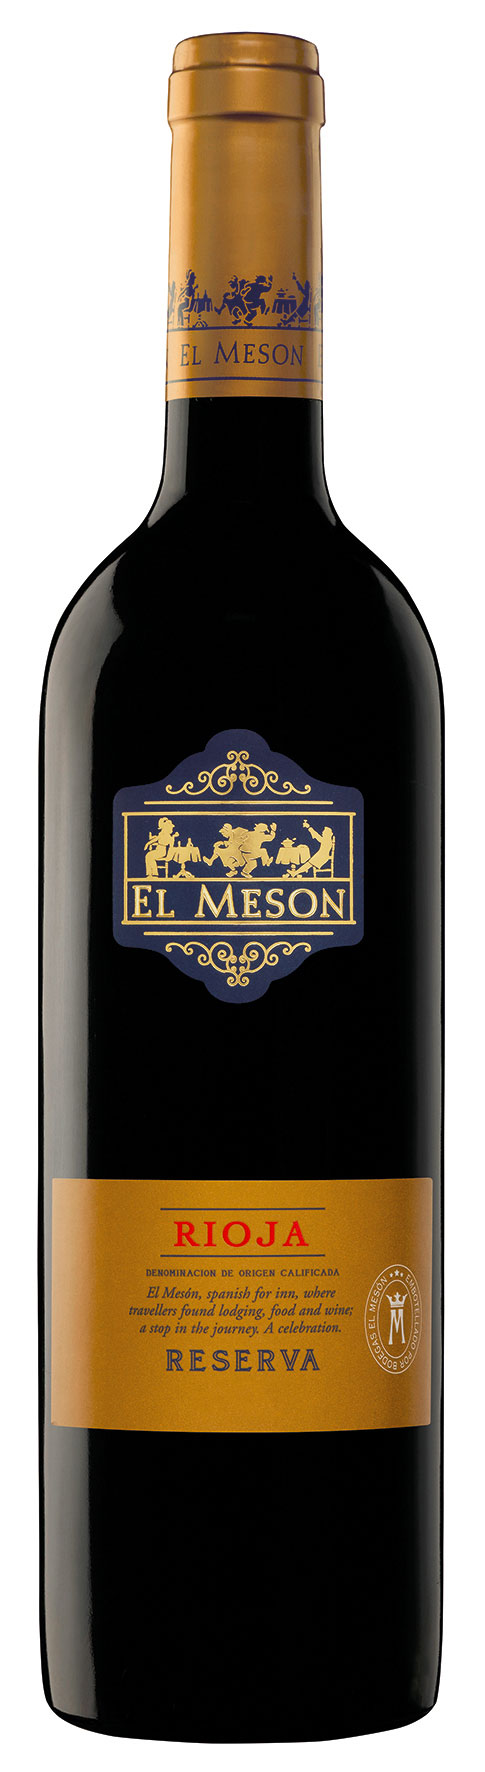 El Meson Rioja Reserva 2017